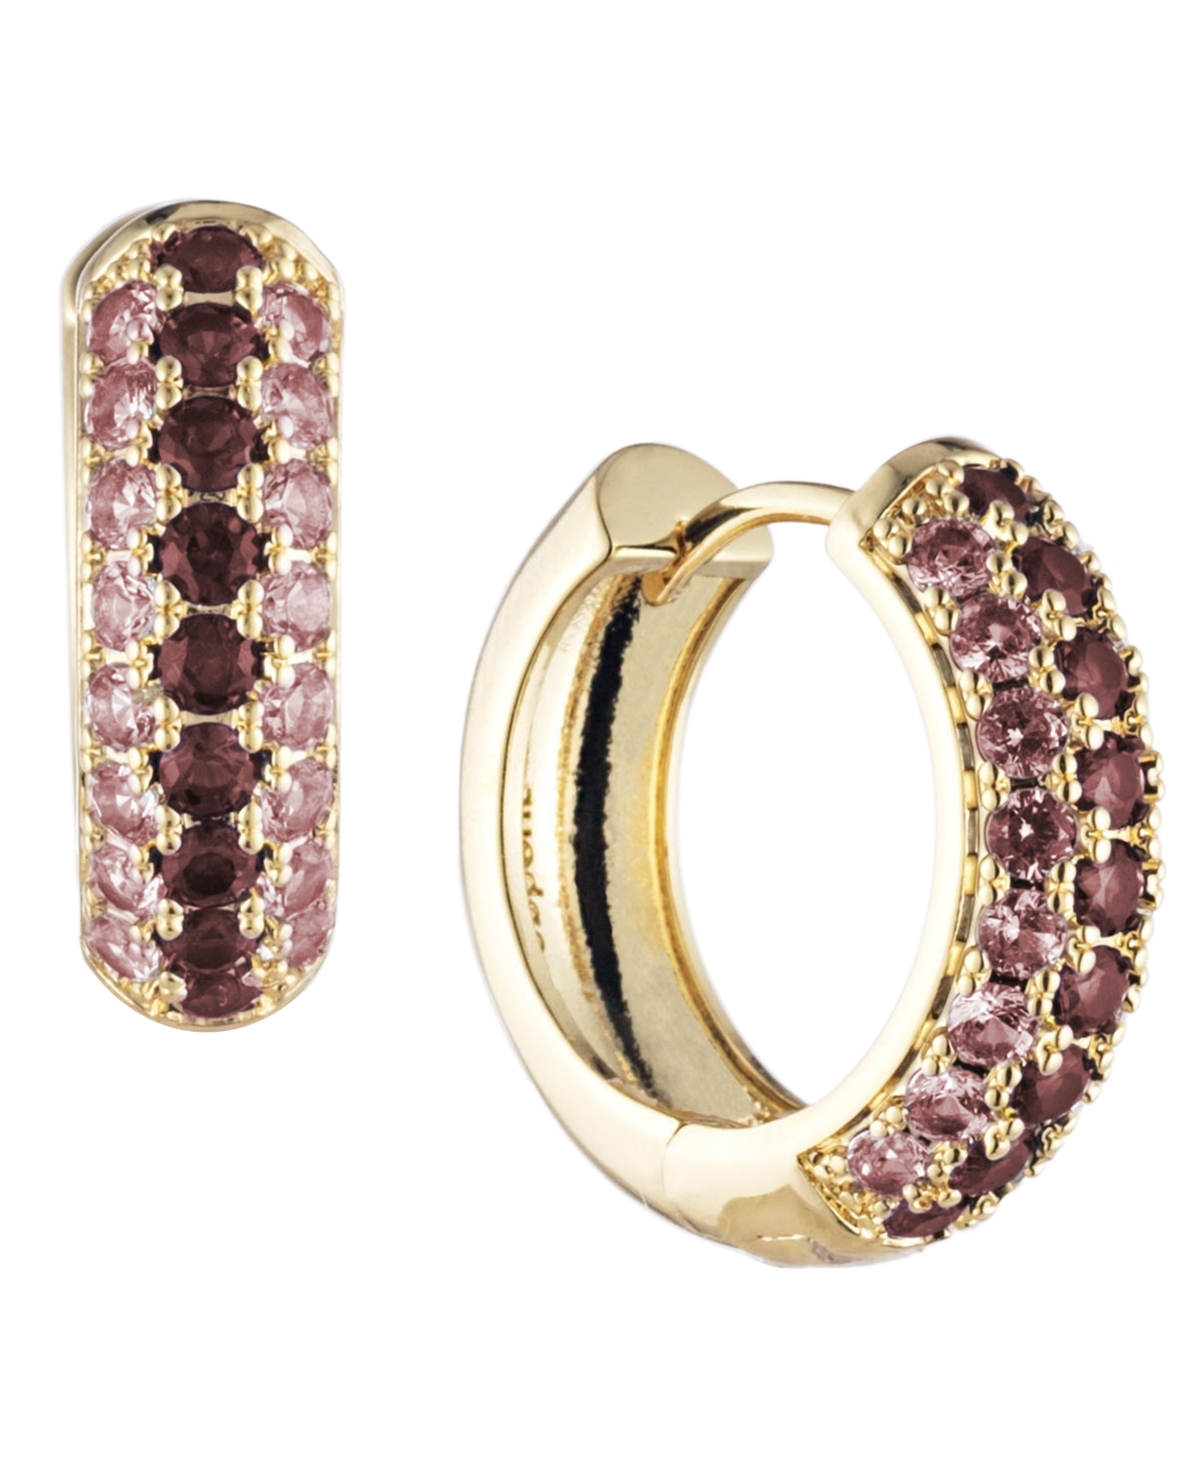 Bonheur Jewelry Addison Pink Red Crystal Mini Hoop Earrings In Karat Gold Plated Brass